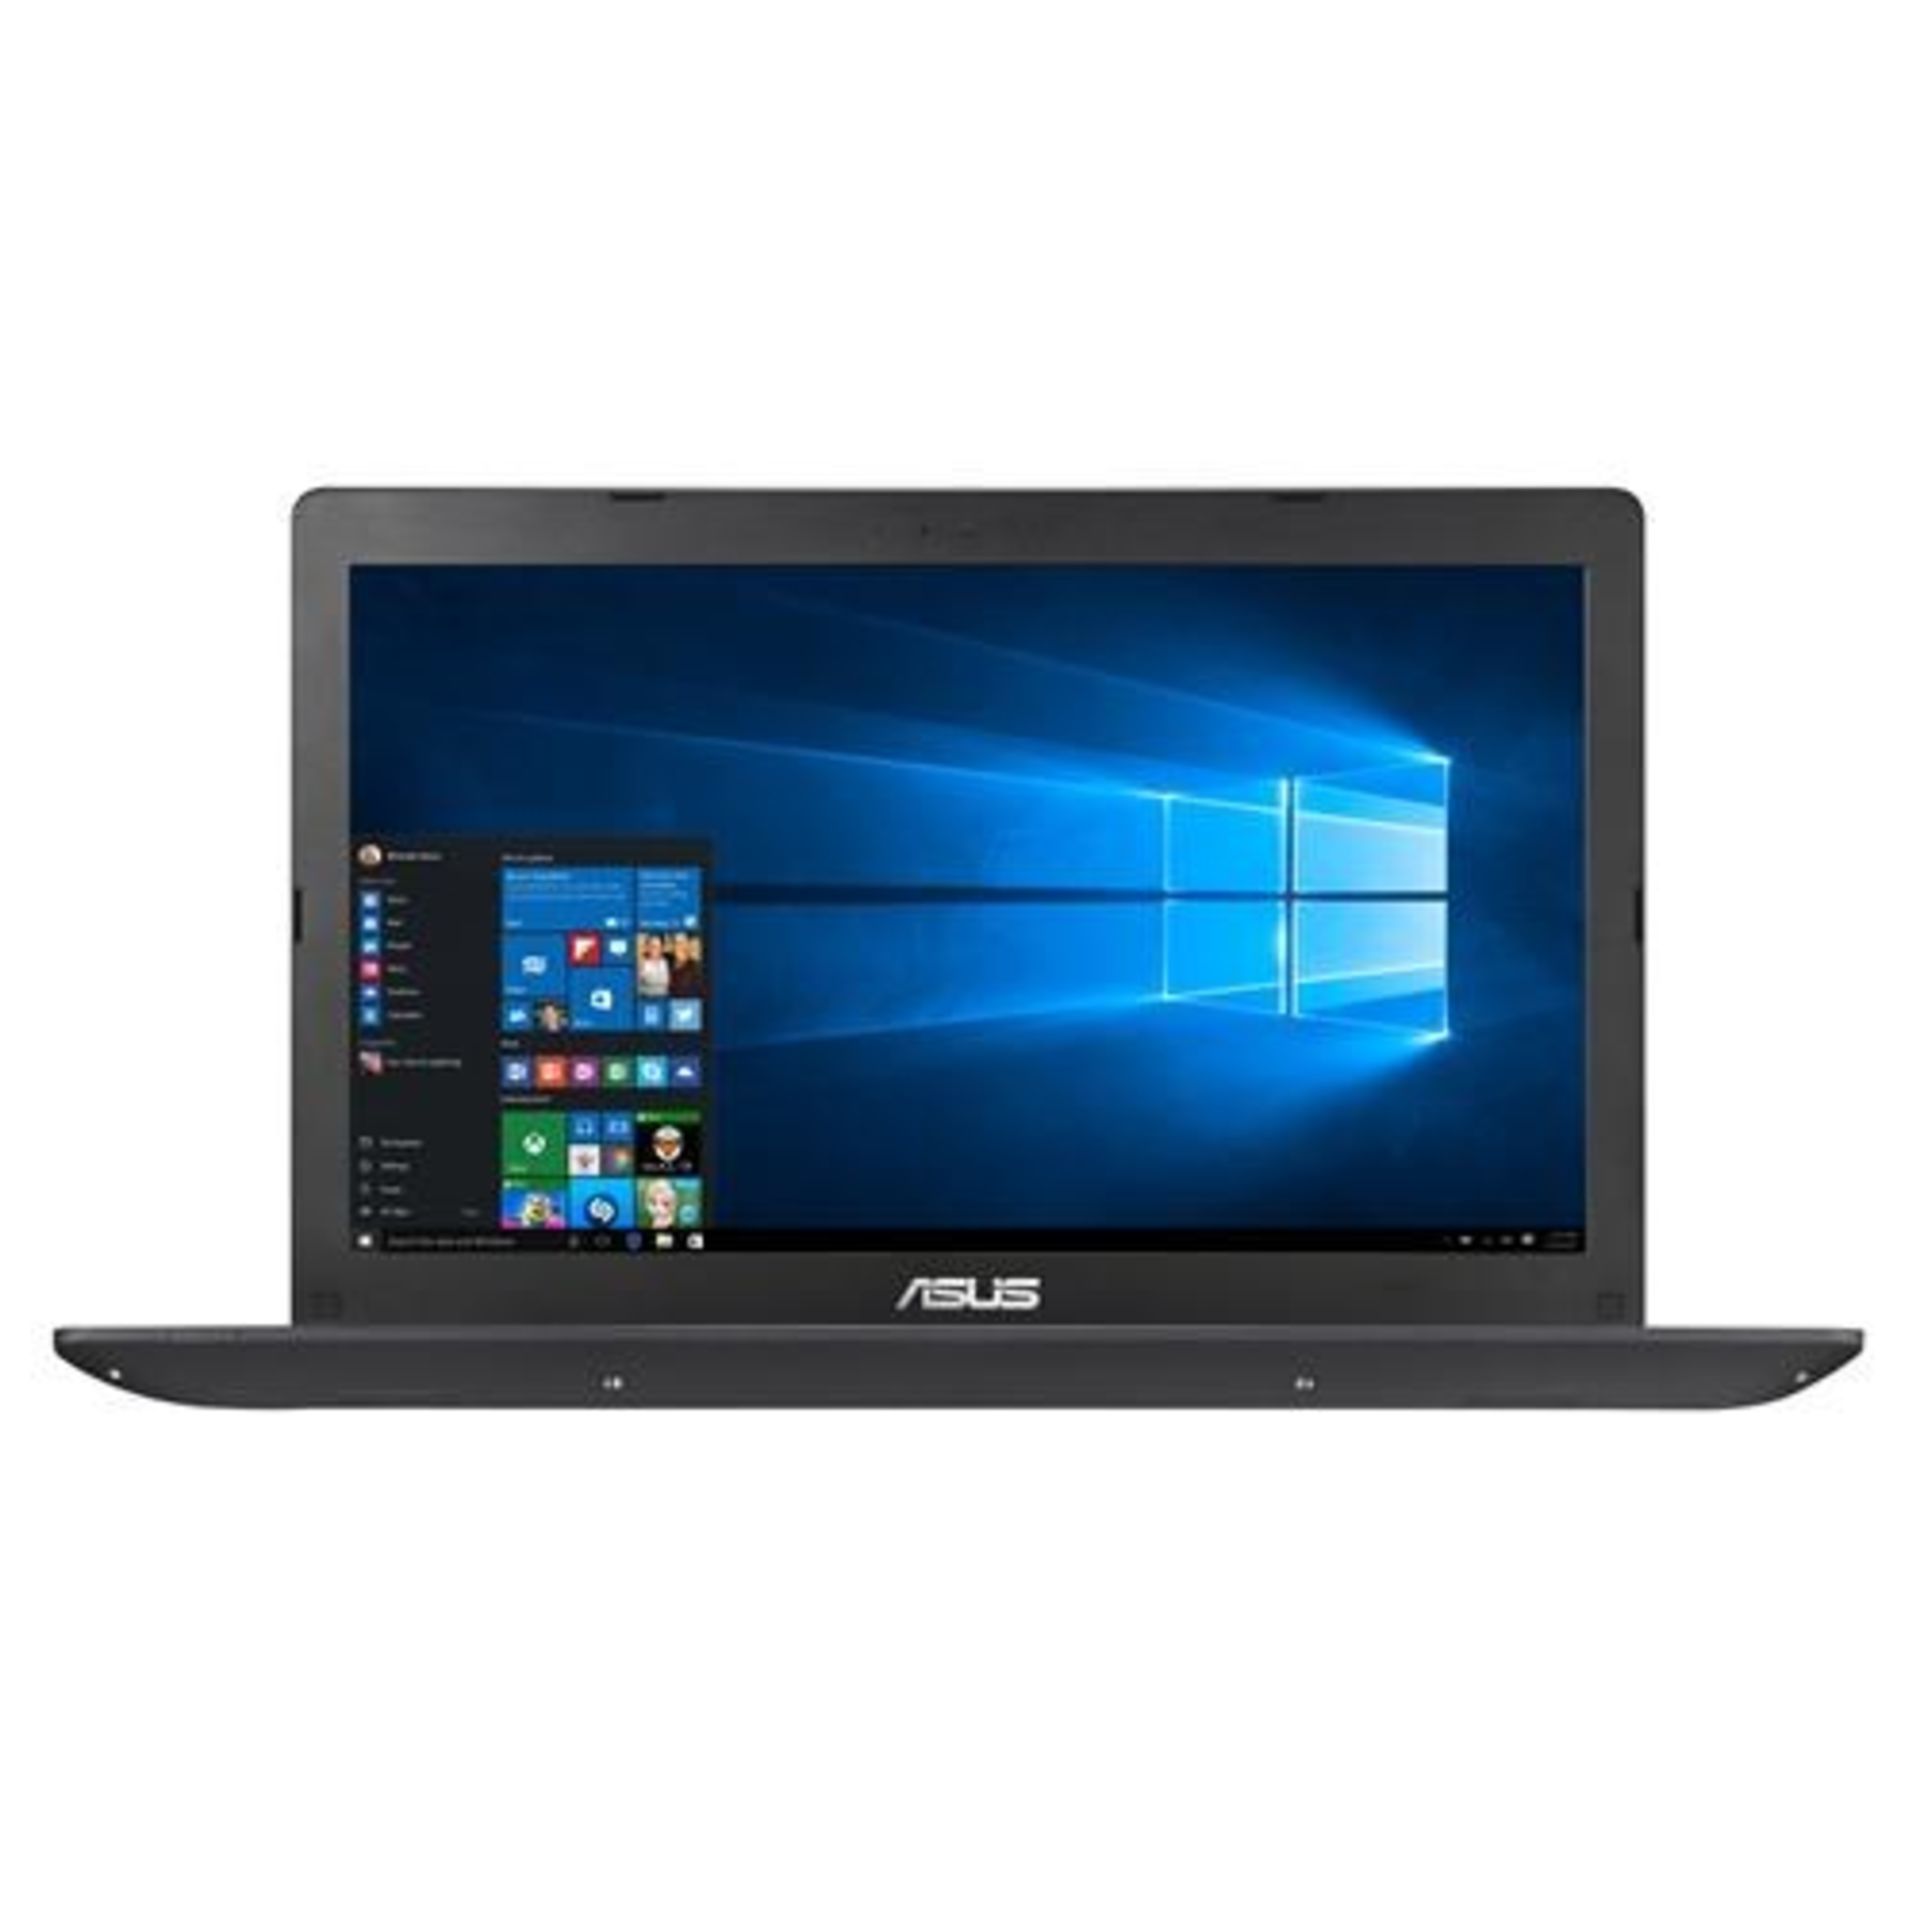 V Brand New Asus F553M Laptop - 4Gb Ram - 1Tb HDD - Windows 8.1 - Intel Celeron N3540 ISP £226 (